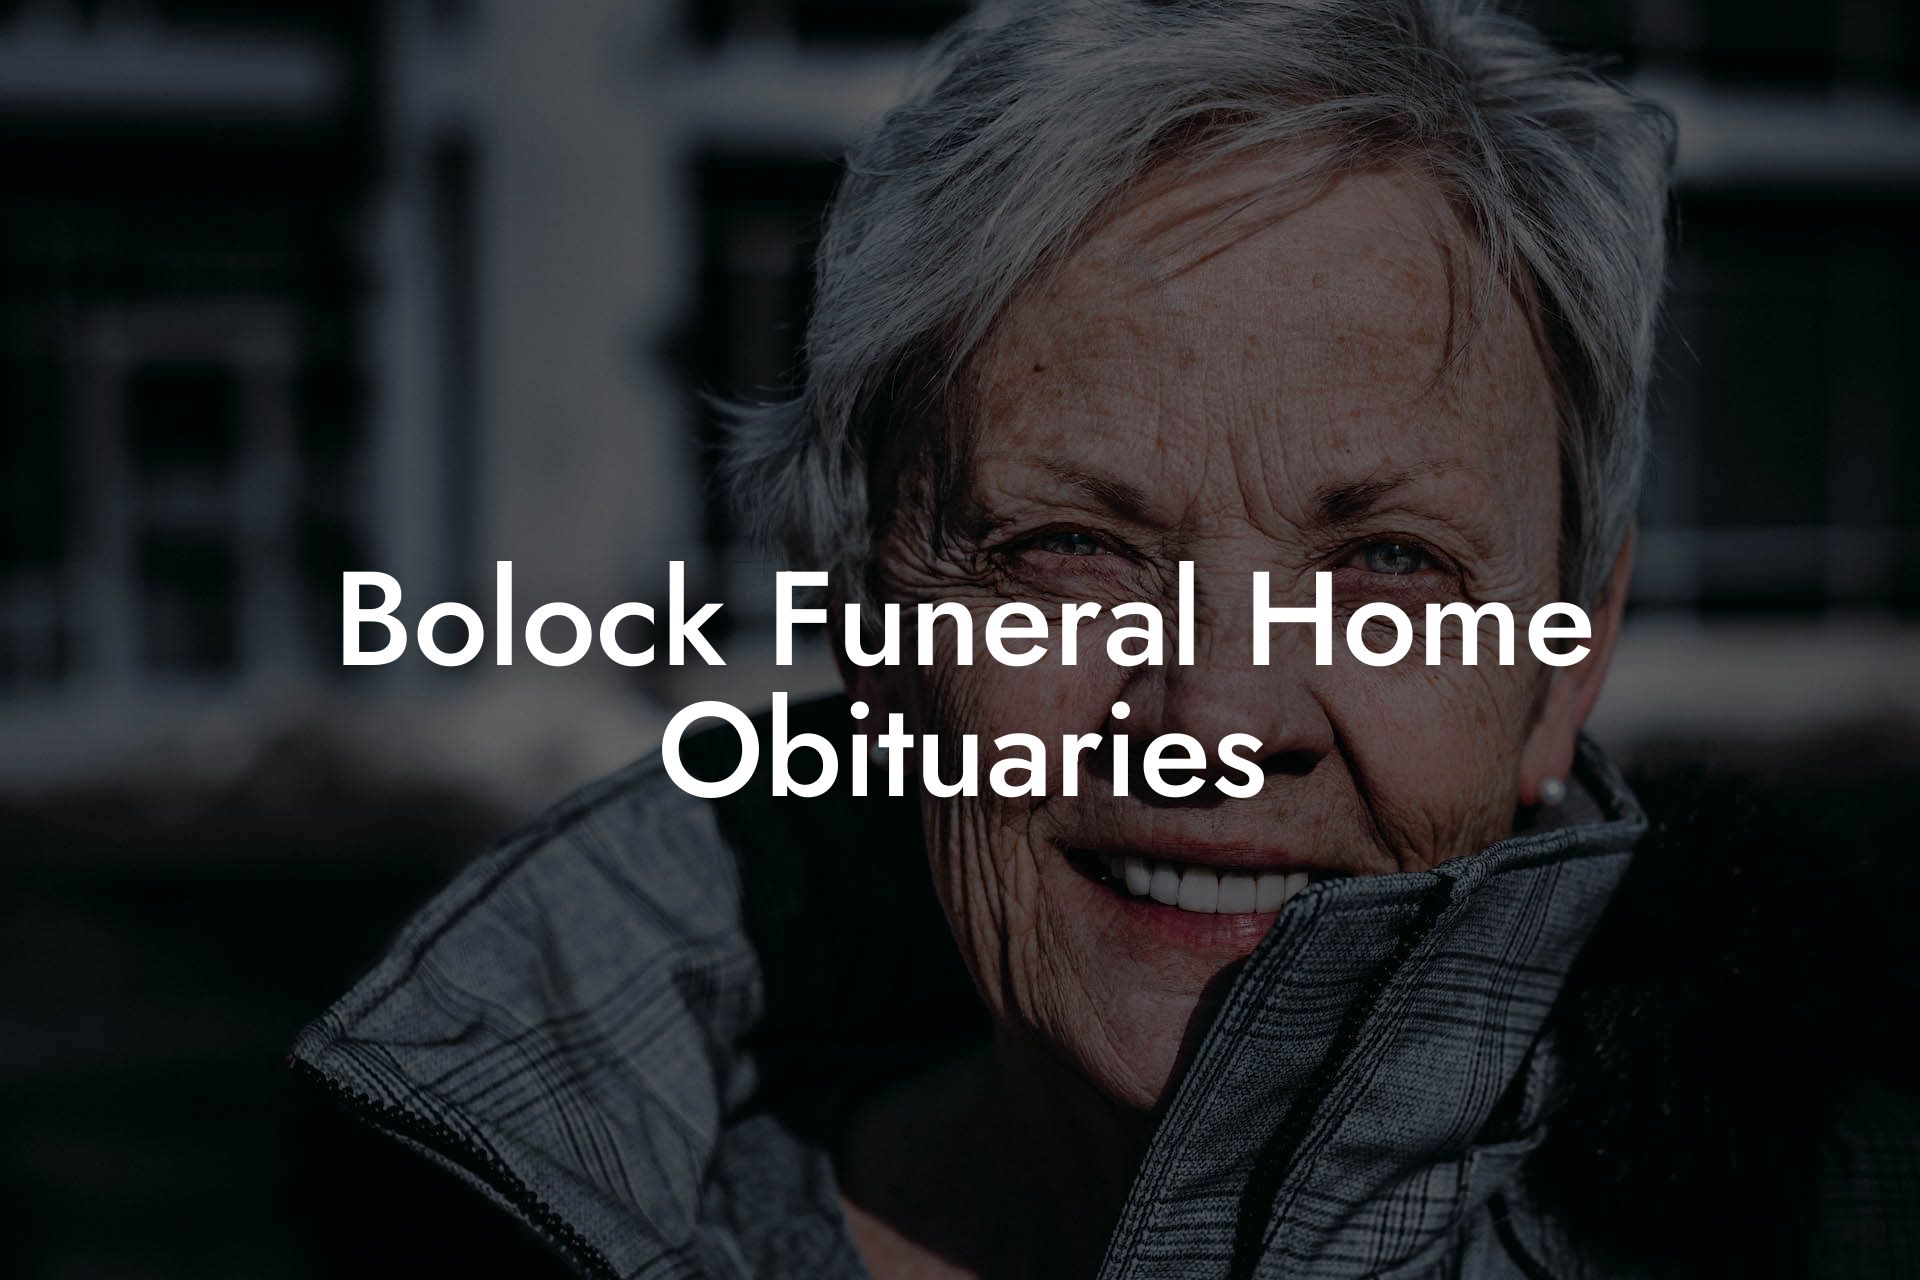 Bolock Funeral Home Obituaries